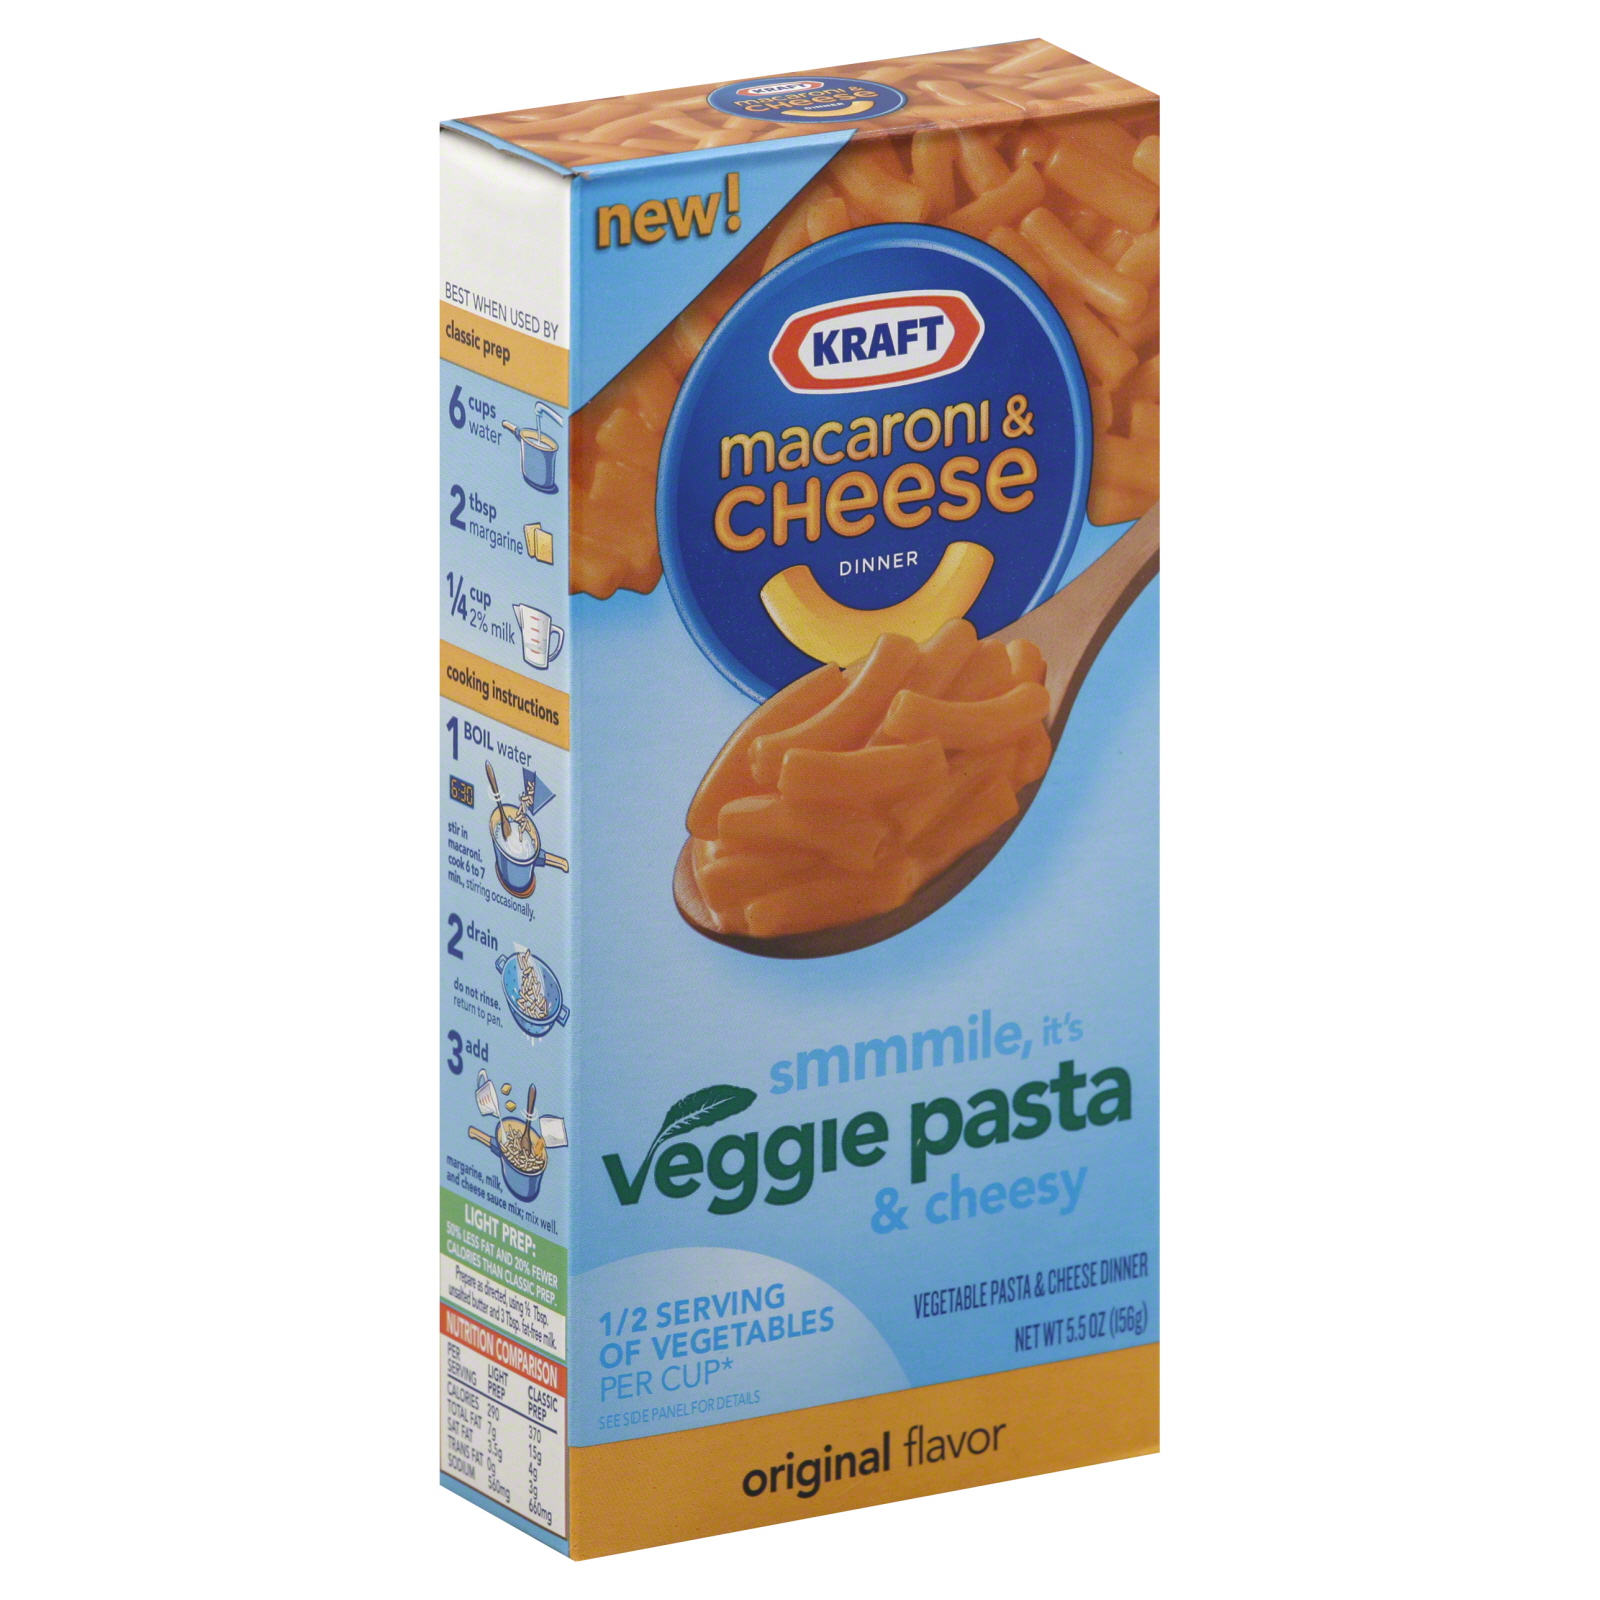 Kraft Macaroni & Cheese Dinner, Veggie Pasta, Original Flavor, 5.5 oz